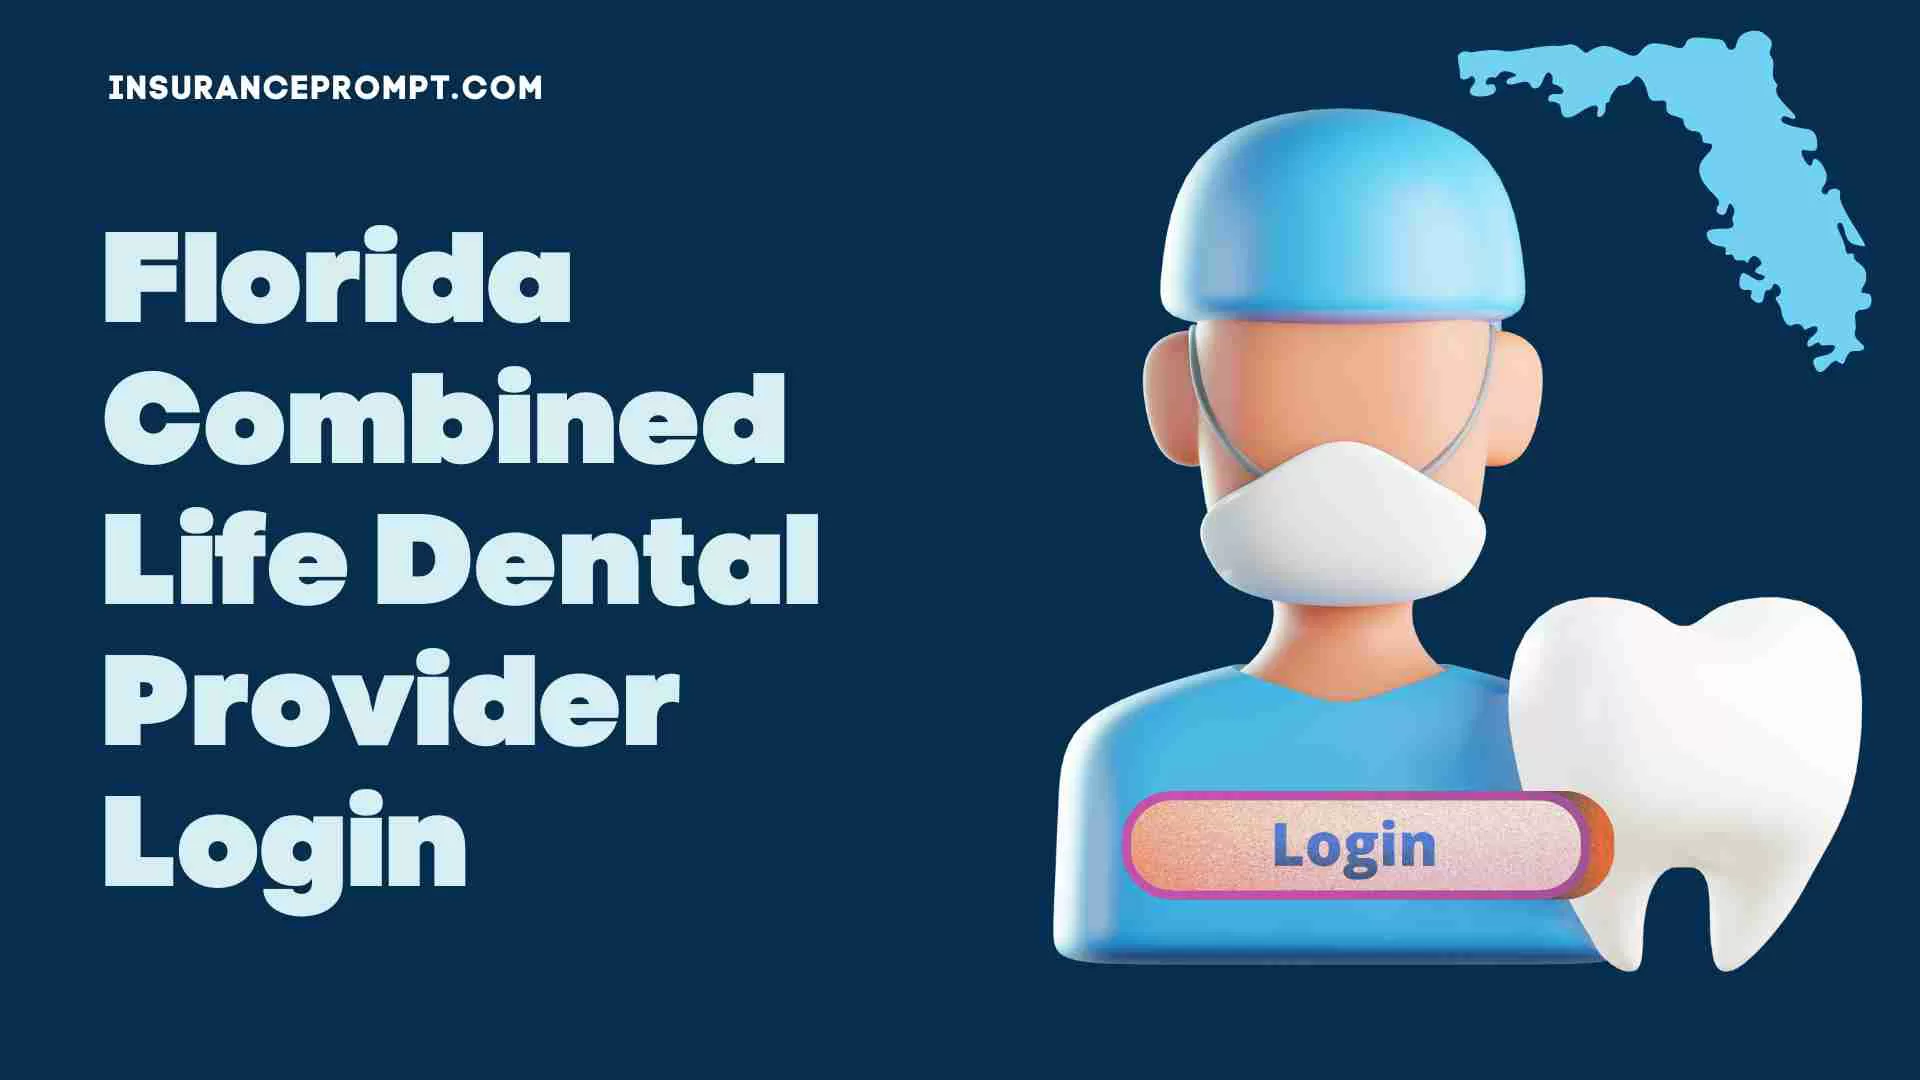 Florida Combined Life Dental Provider Login: Online Access